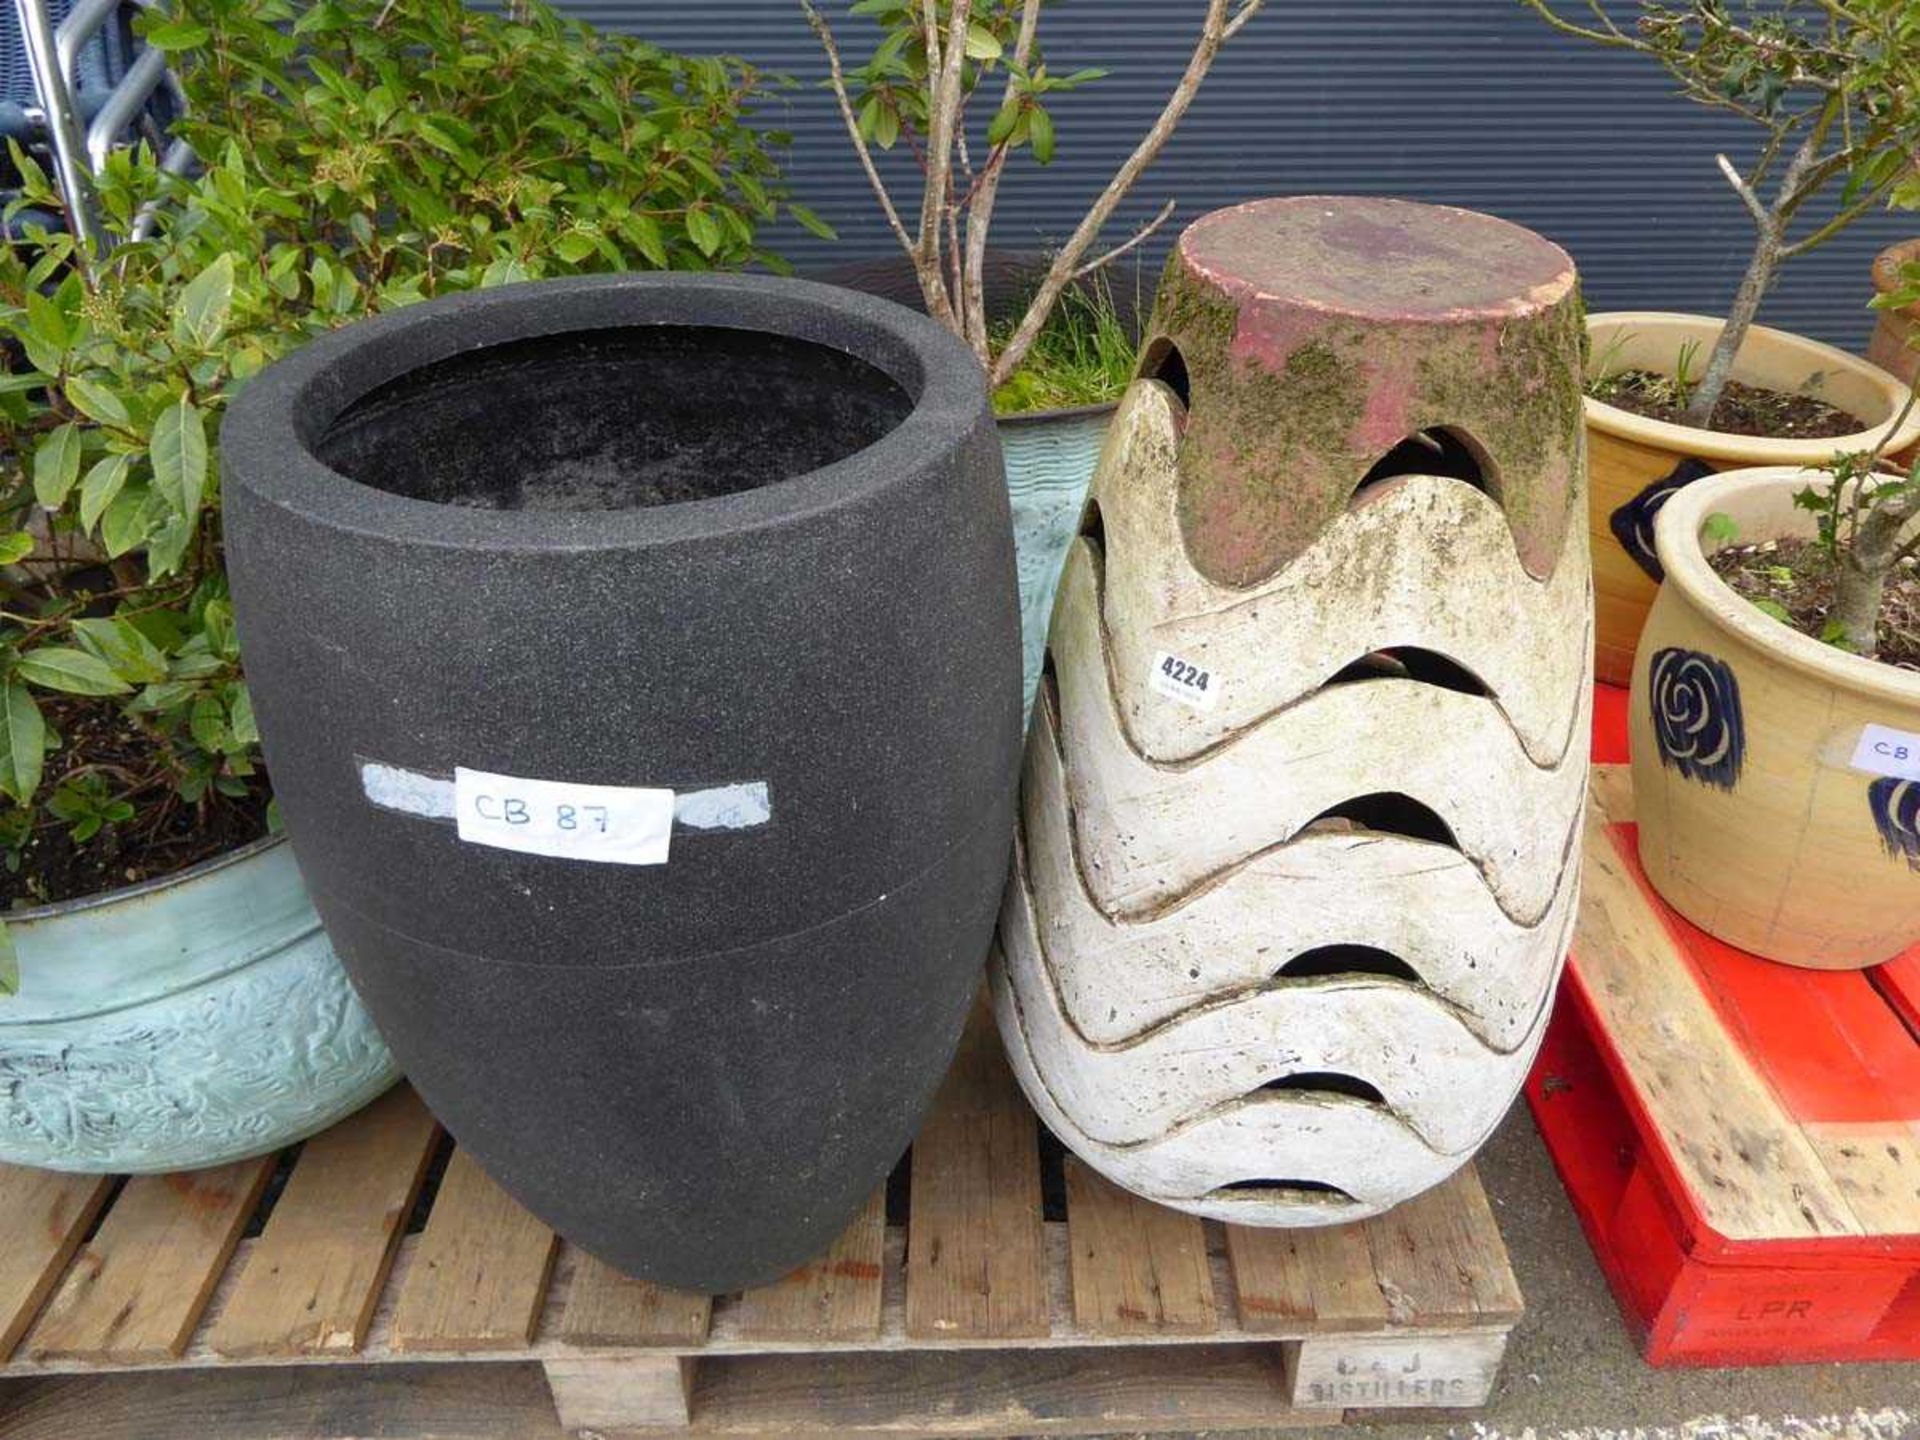 1 plastic grey pot and cone shaped ornament